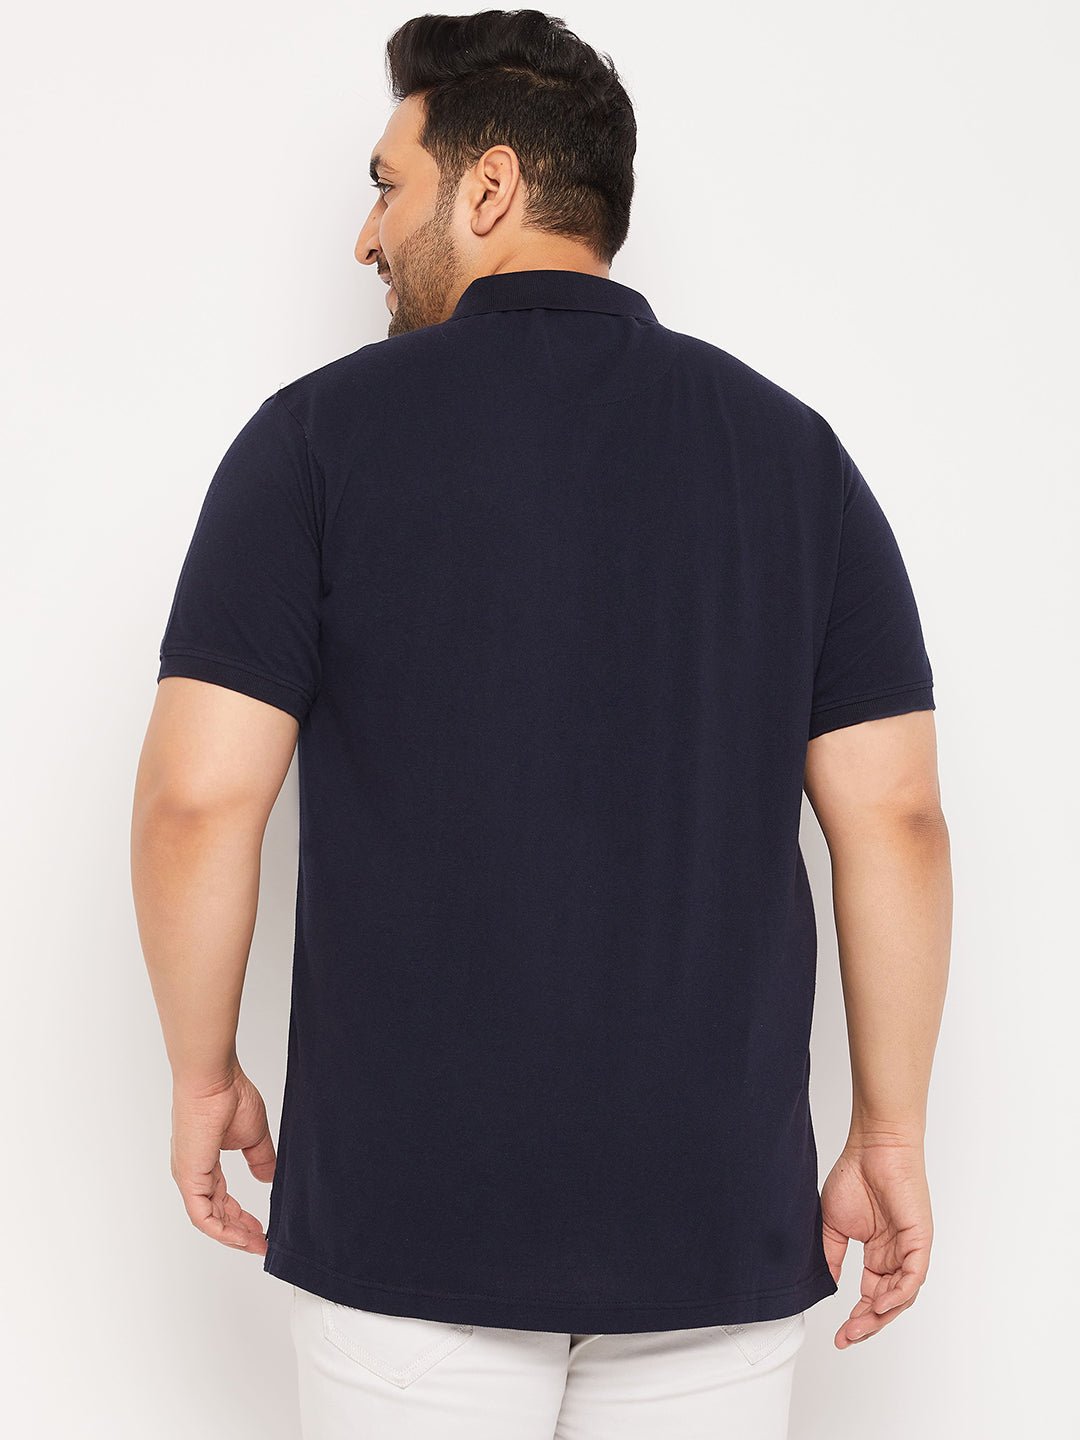 Plus Size Navy Blue Polo T-Shirt - clubyork